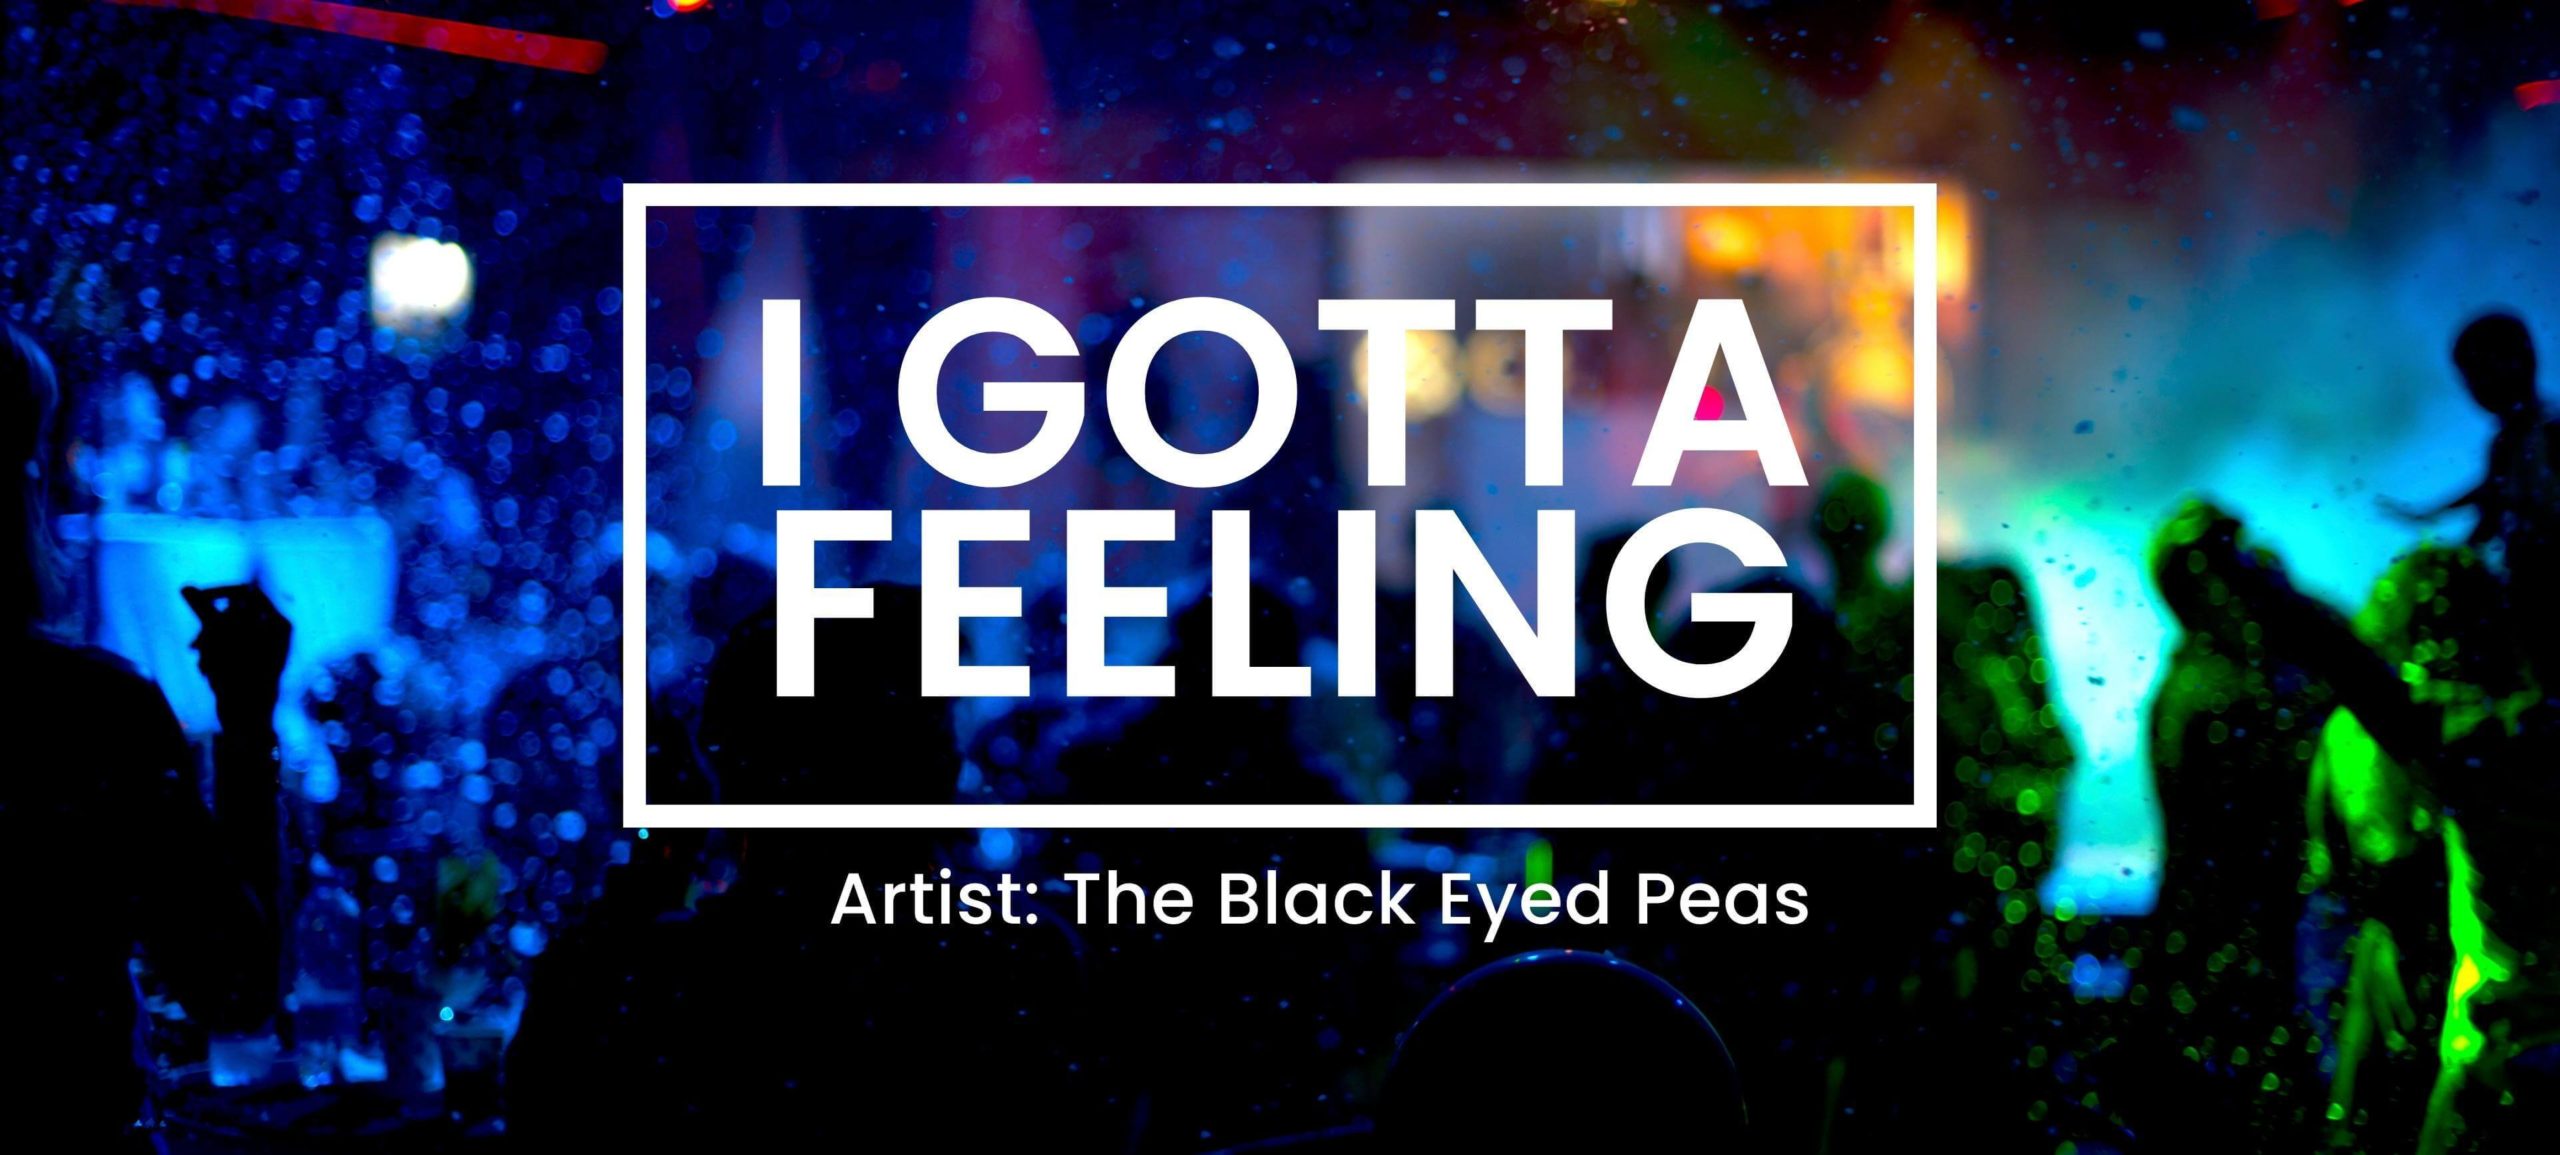 "I Gotta Feeling" streamed songs on spotify 